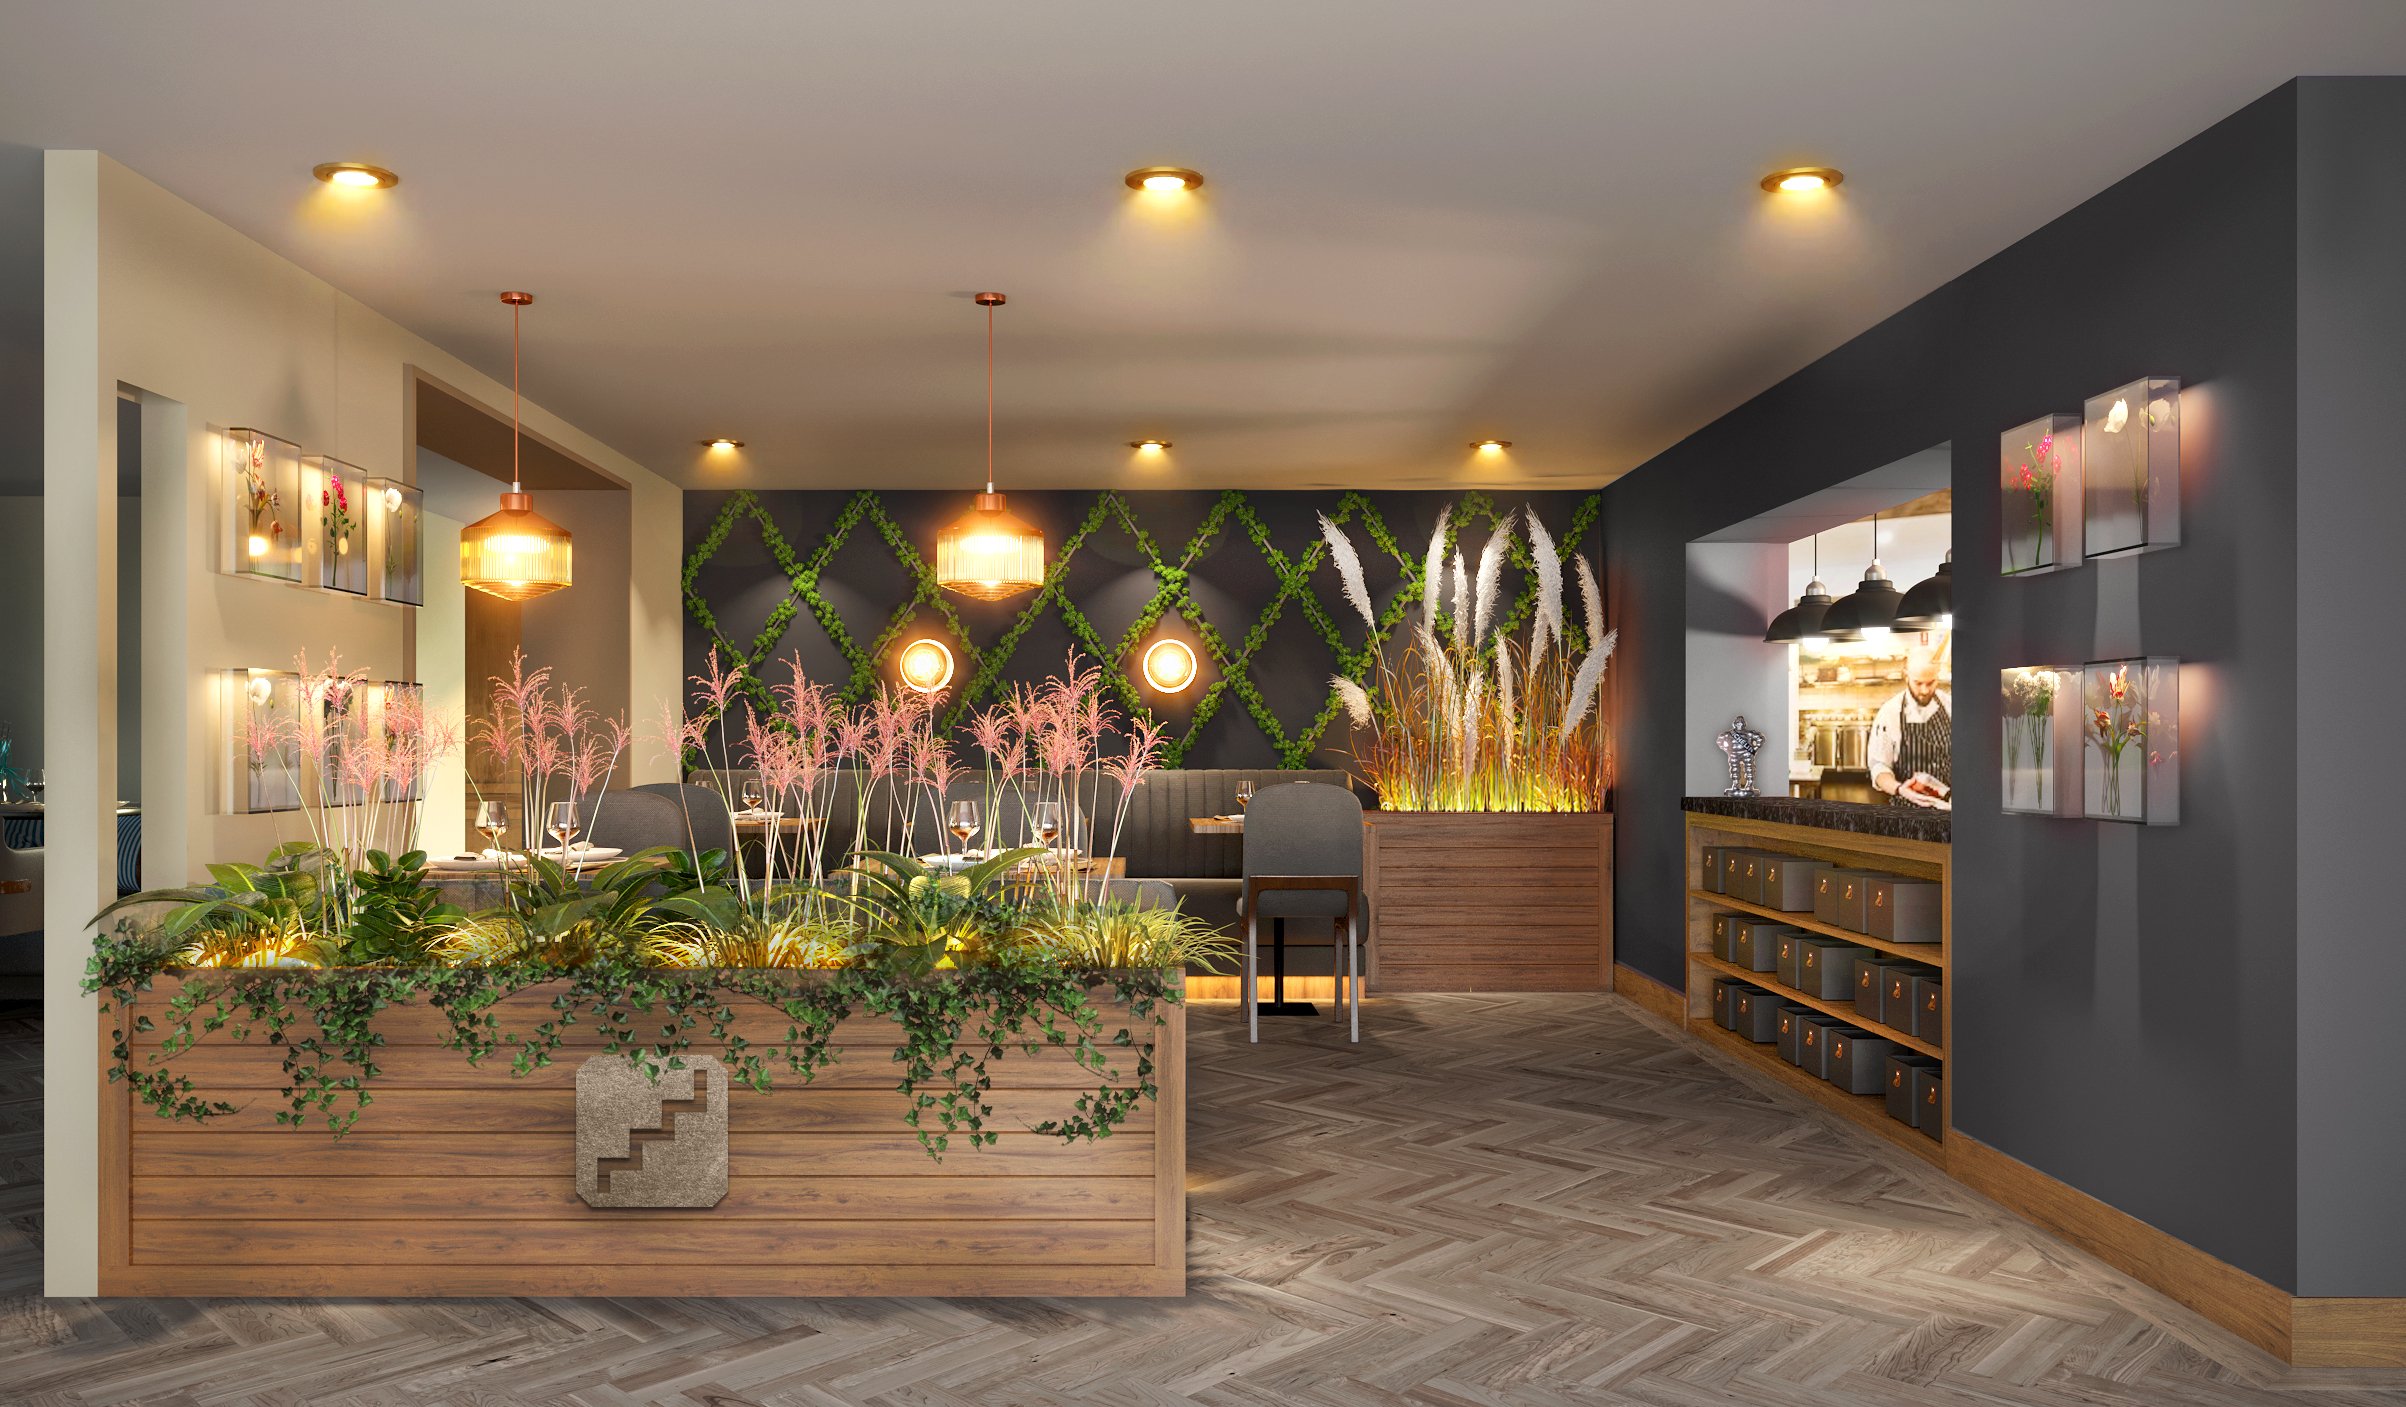 CGI Visualisation : The restaurant extension